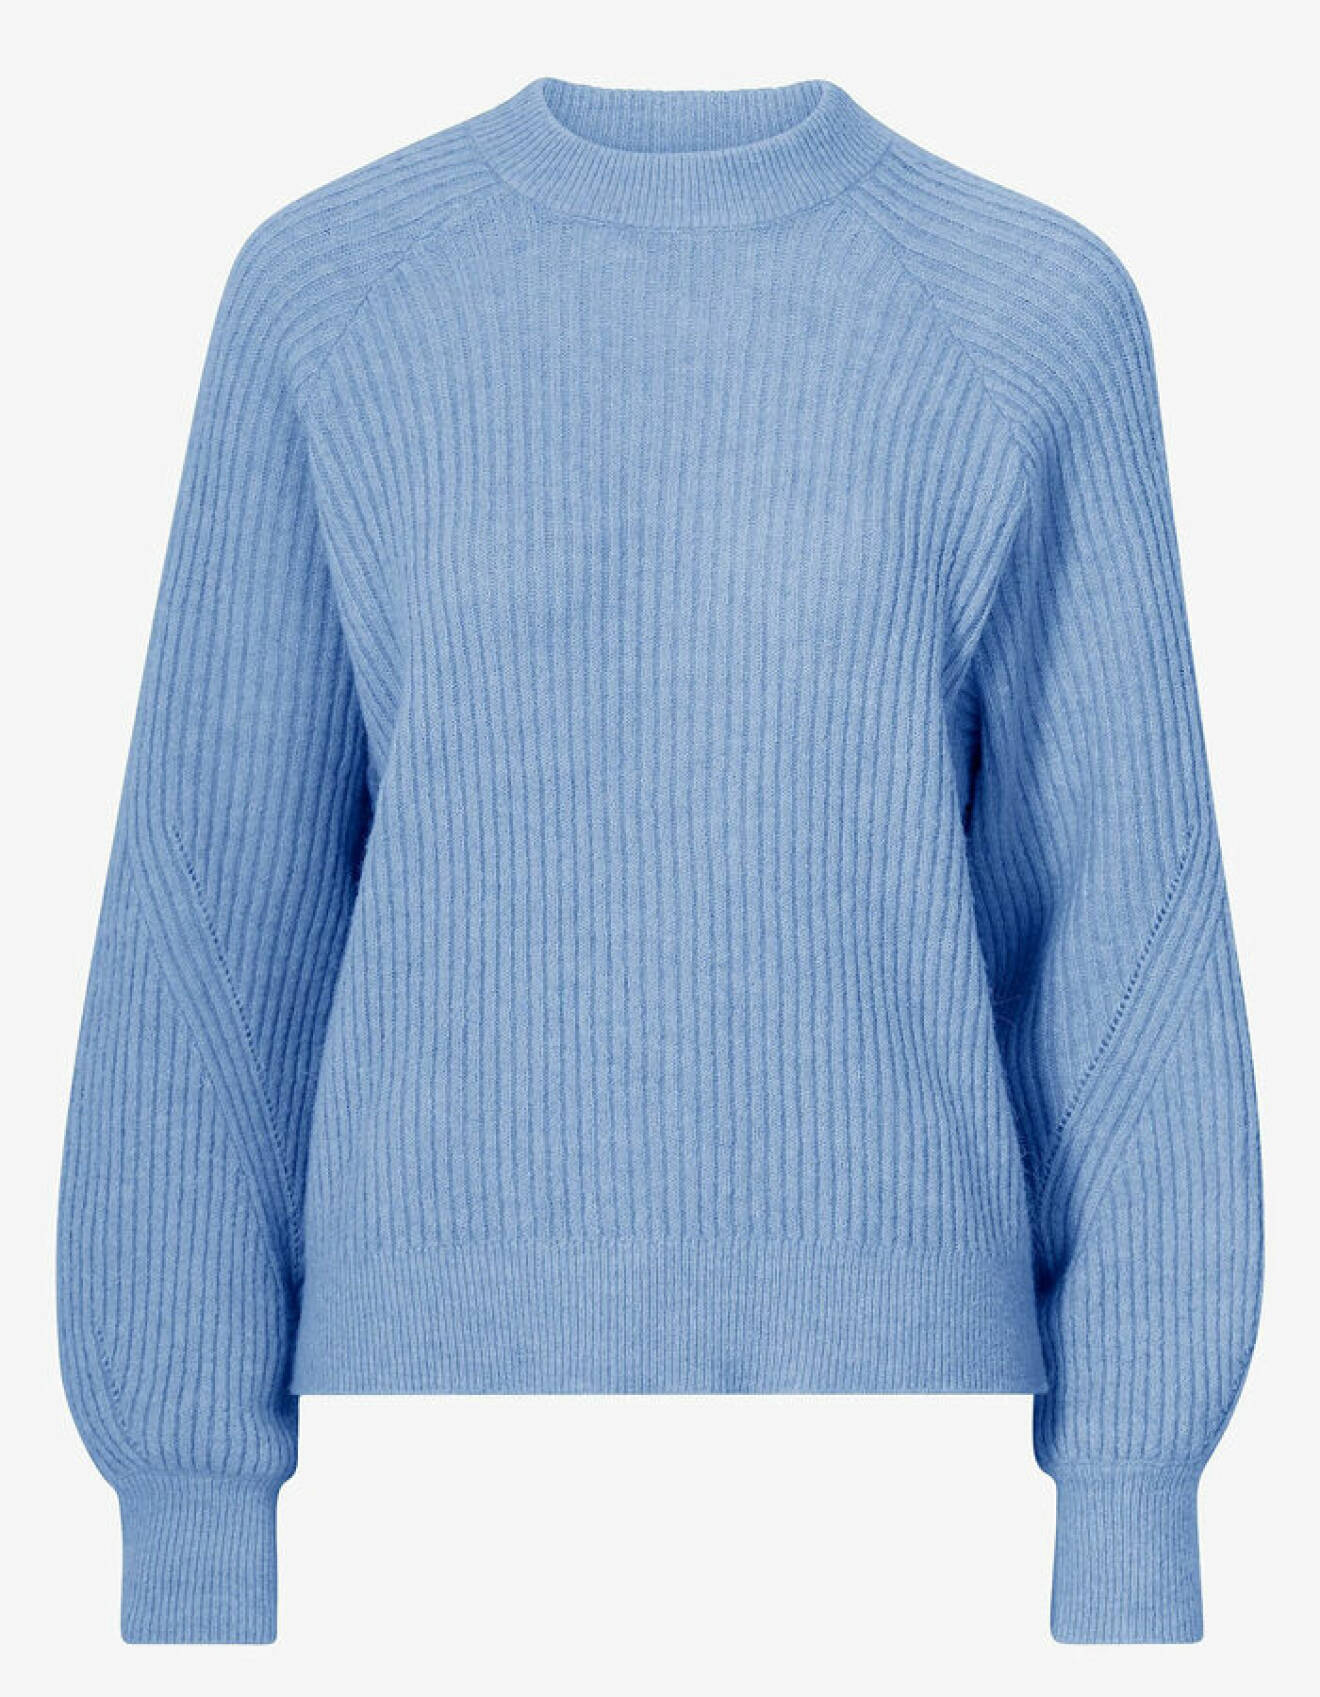 Blå stickad tröja, Ellos Collection